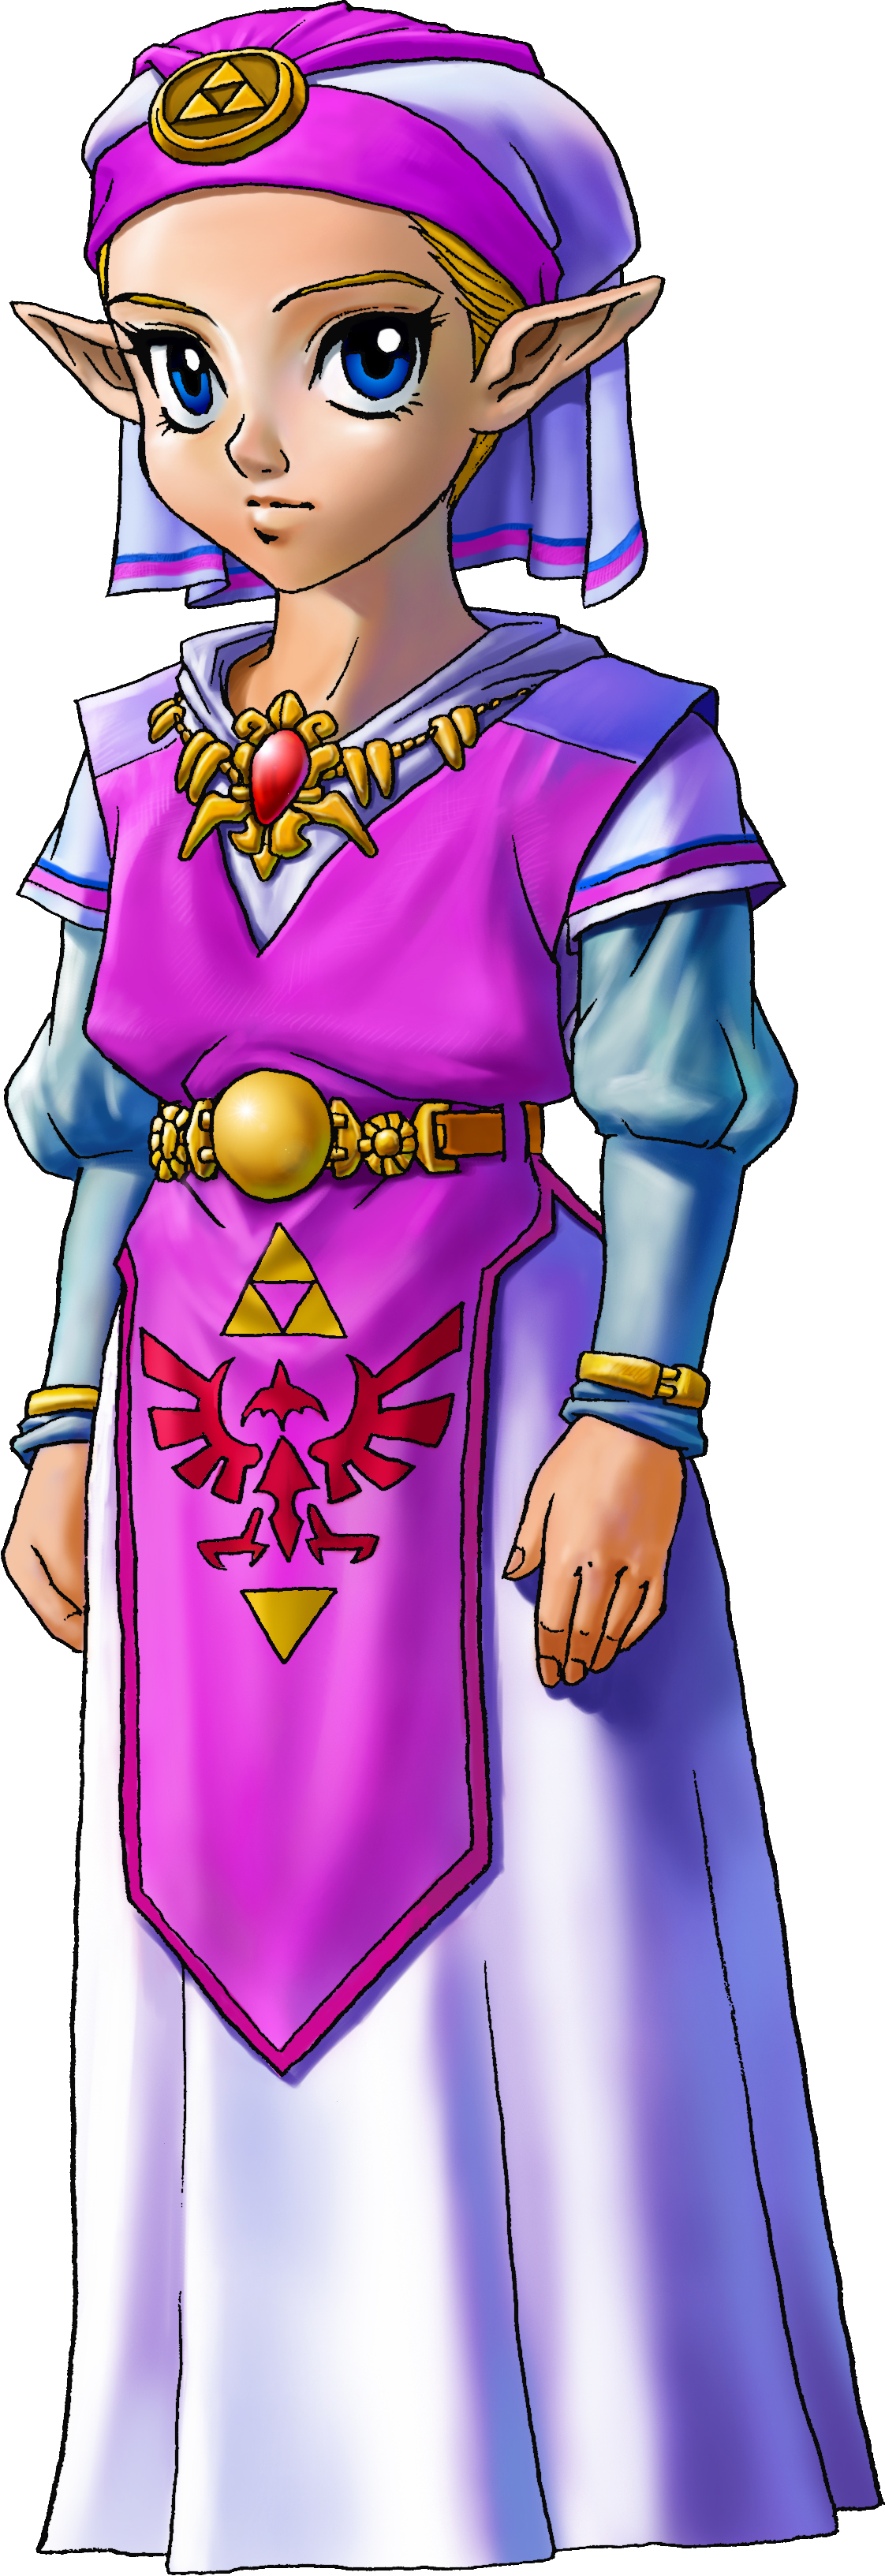 The Legend of Zelda Ocarina of Time The Legend of Zelda Ocarina of